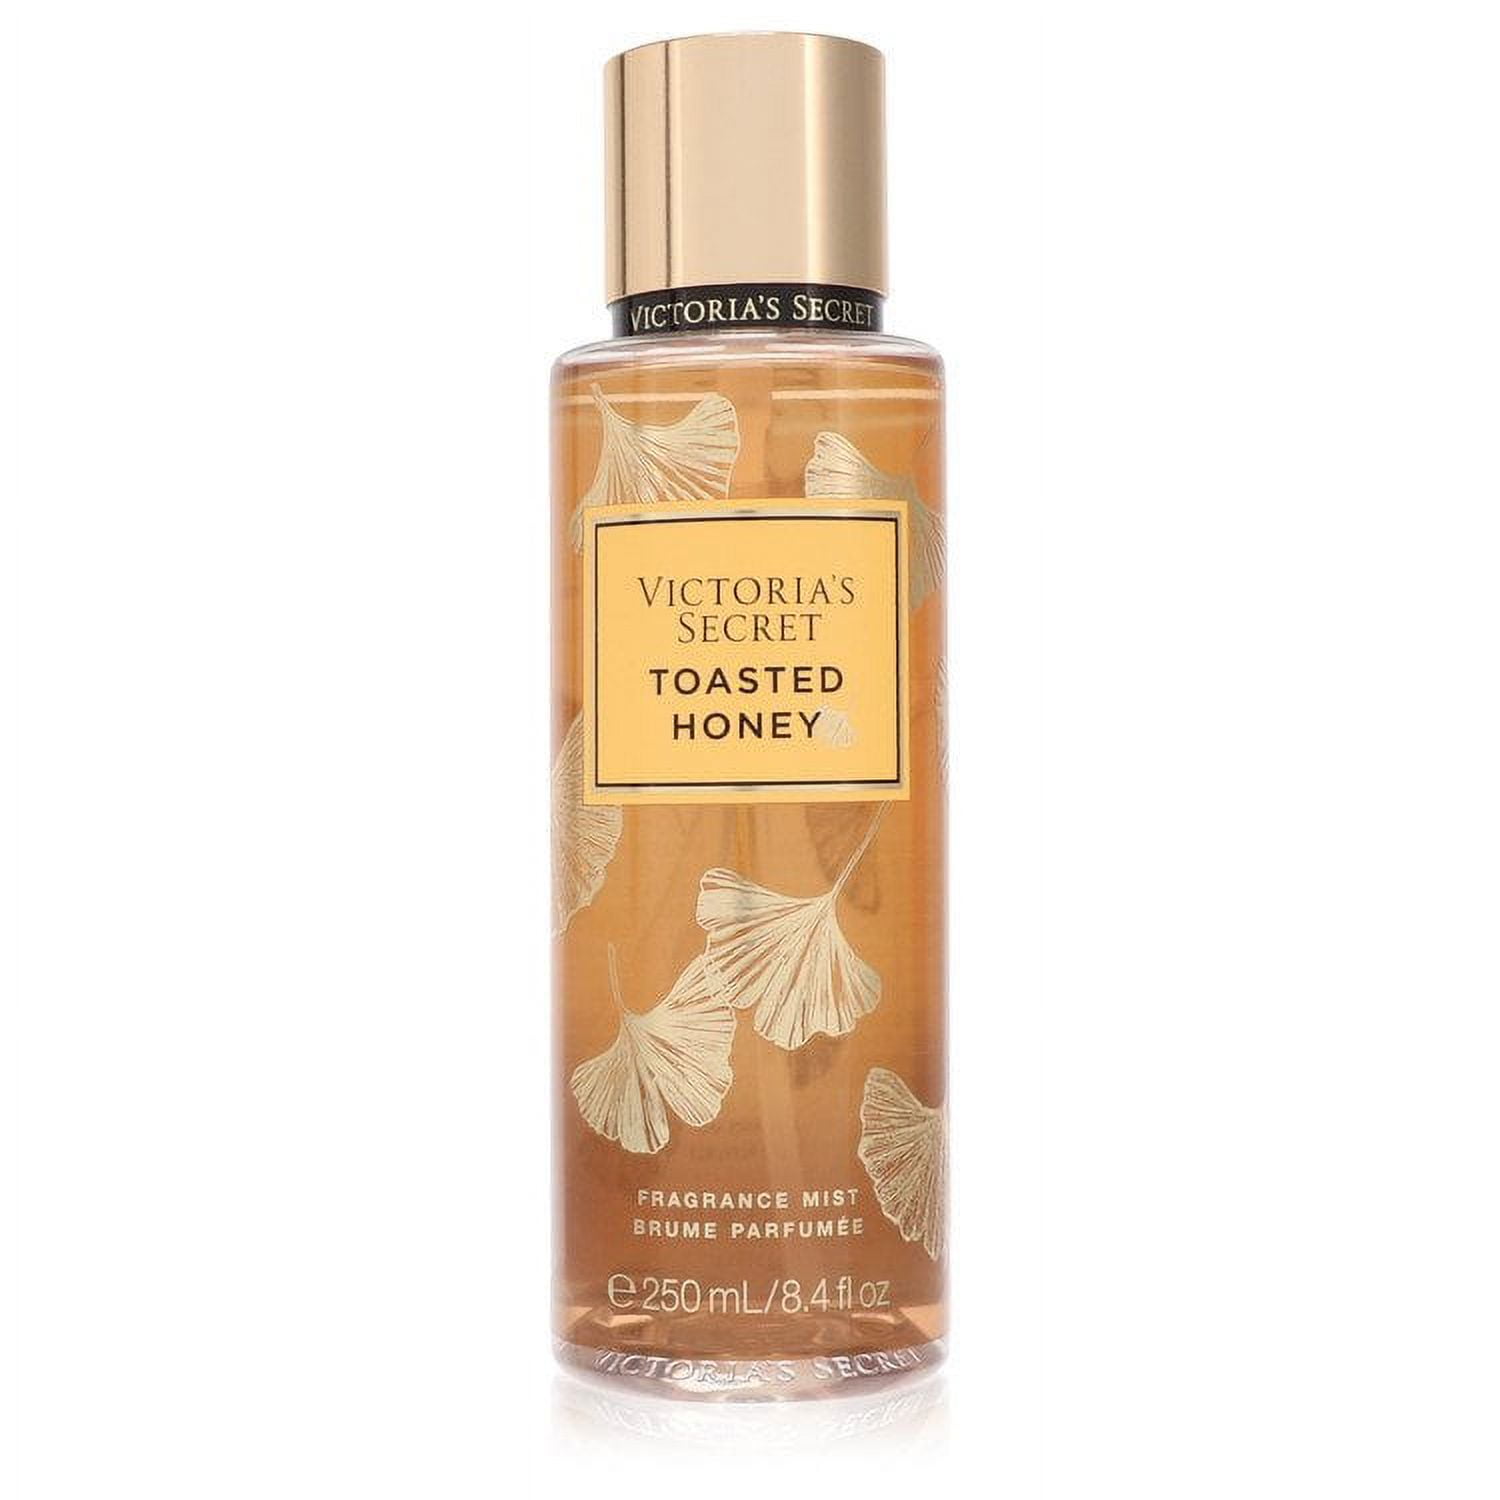 Victoria's Secret Toasted Honey by Victoria's Secret - Walmart.com